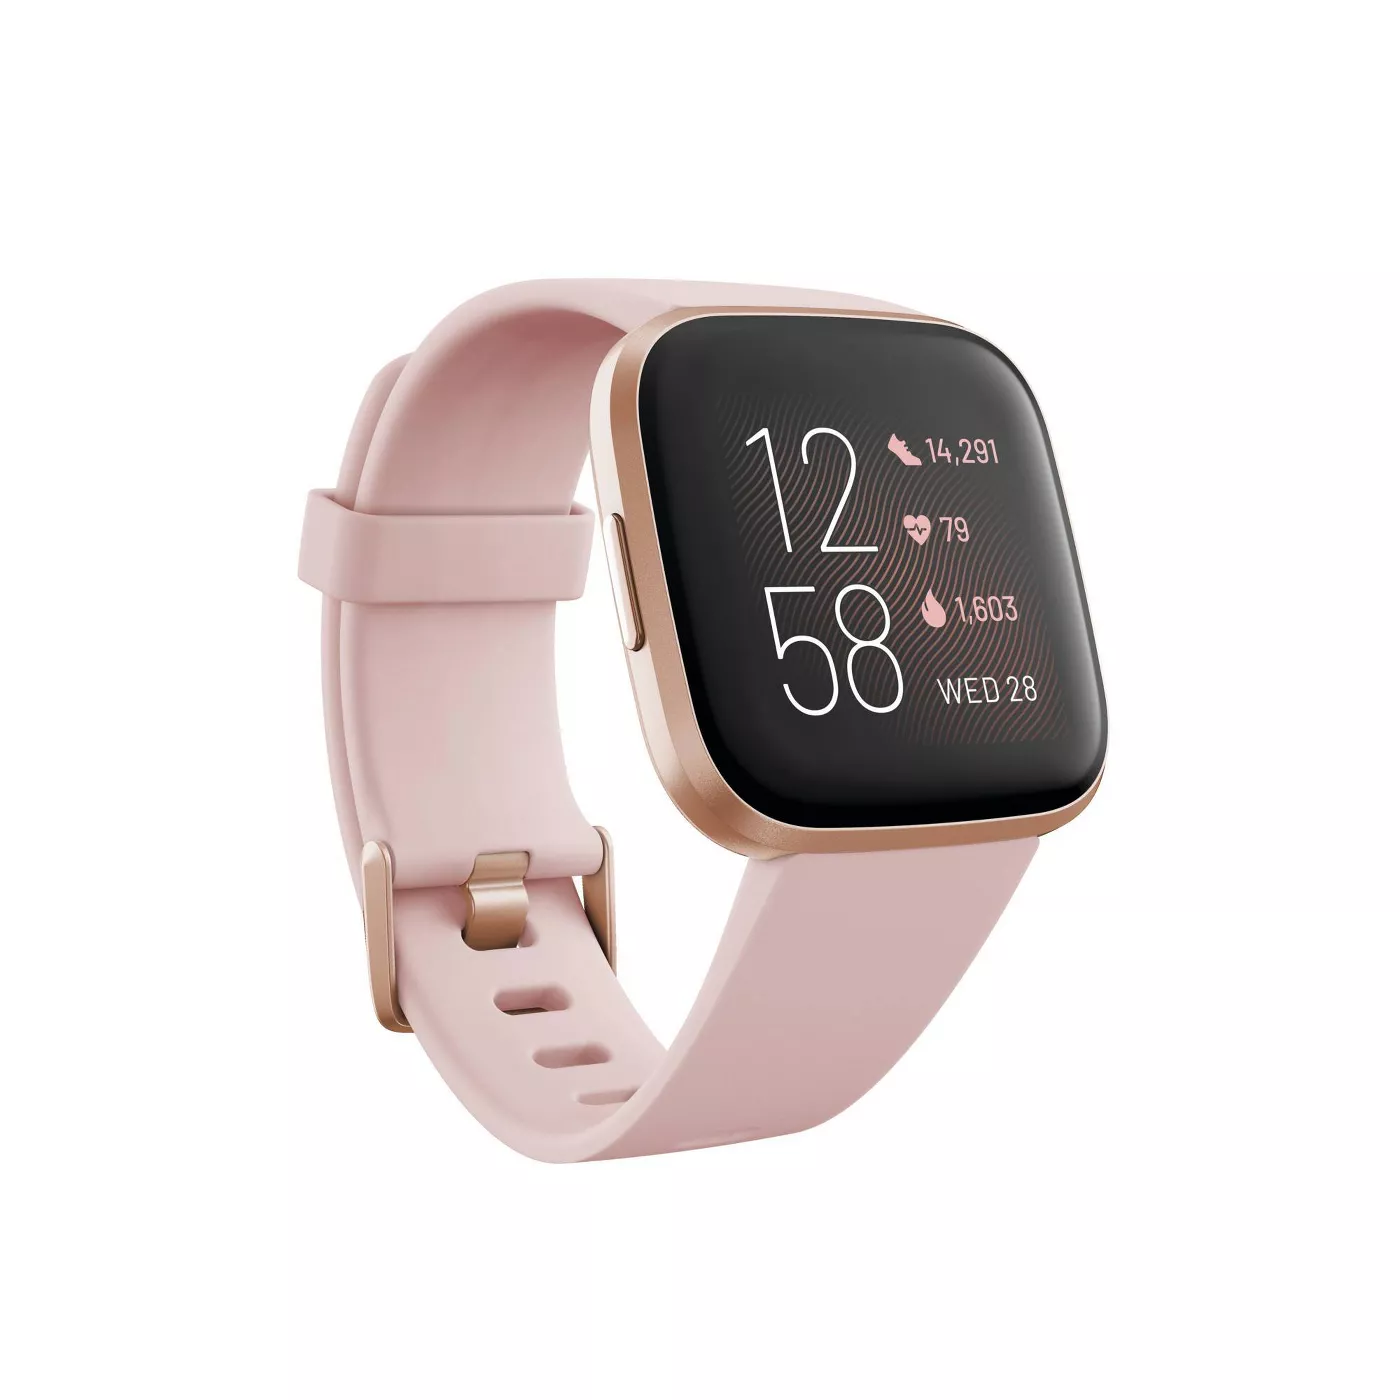 Fitbit Versa 2 Smartwatch - image 1 of 12